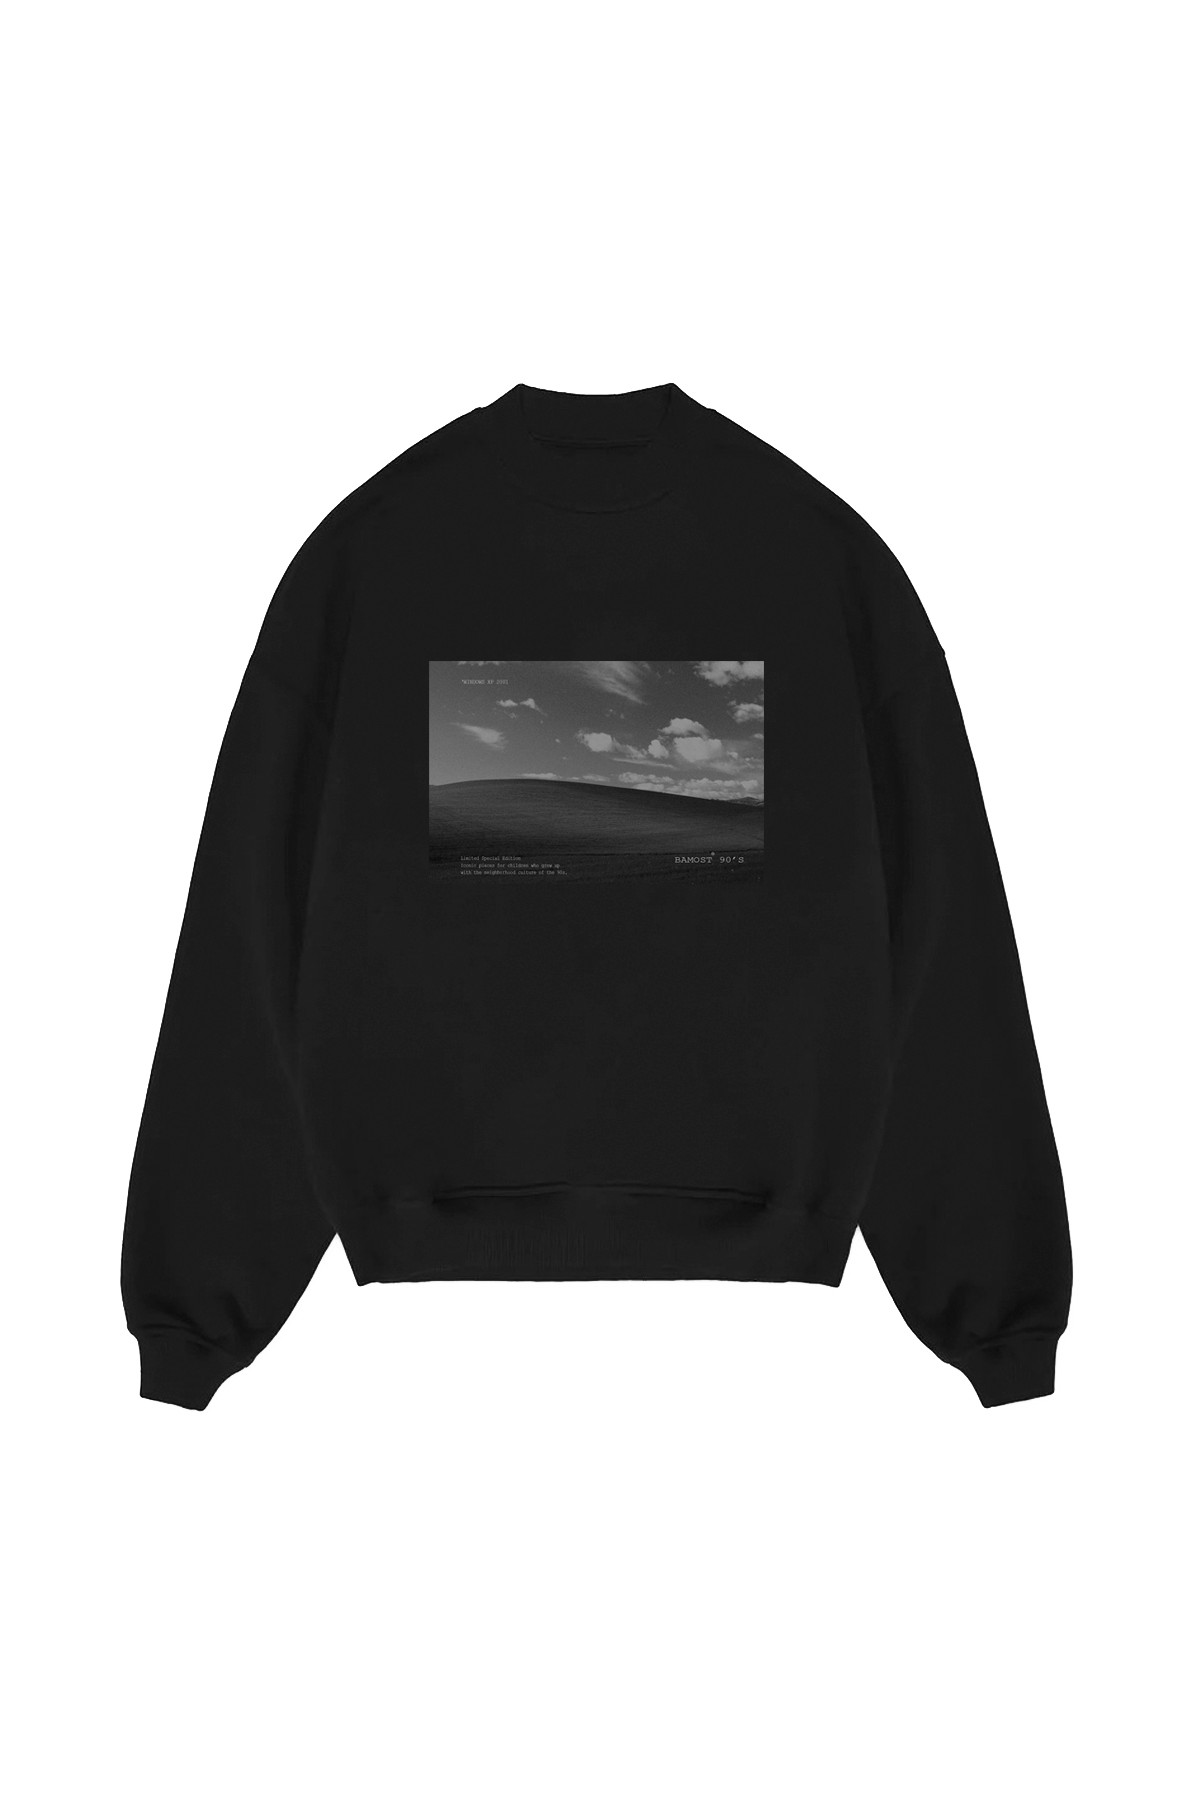 Wdws Xp - 90's Club Oversize Sweatshirt - BLACK